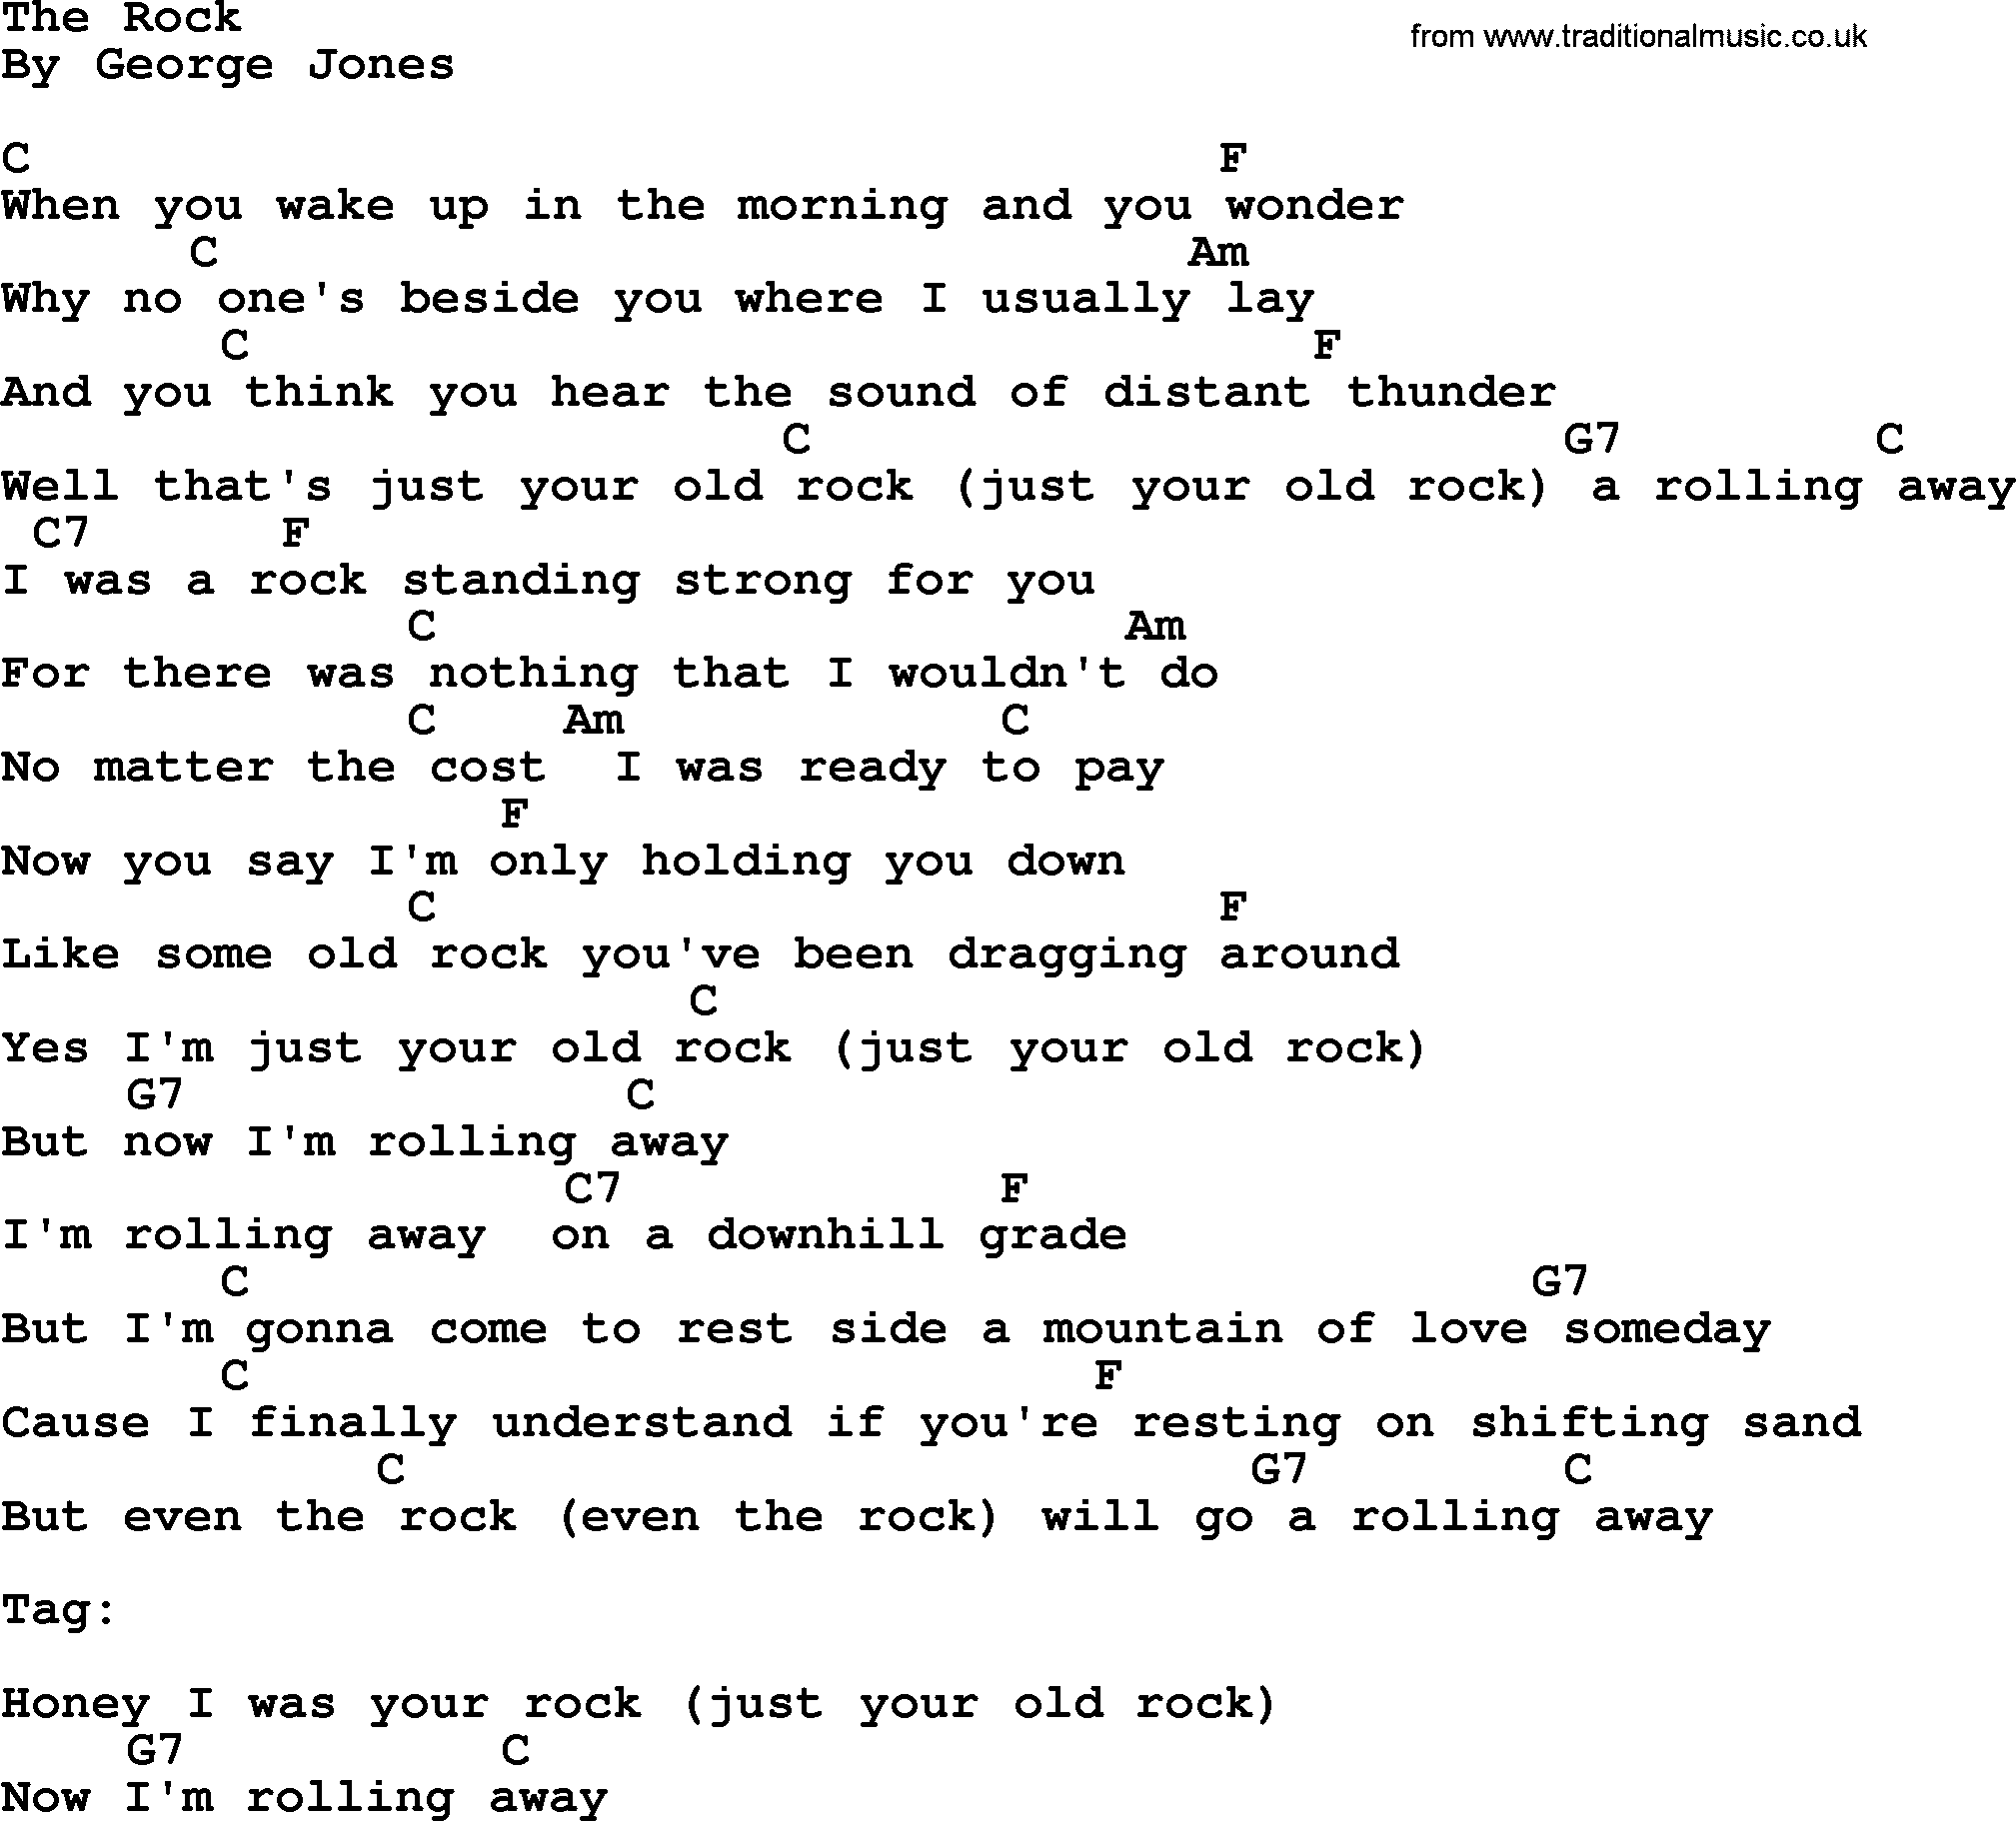 George Jones song: The Rock, lyrics and chords